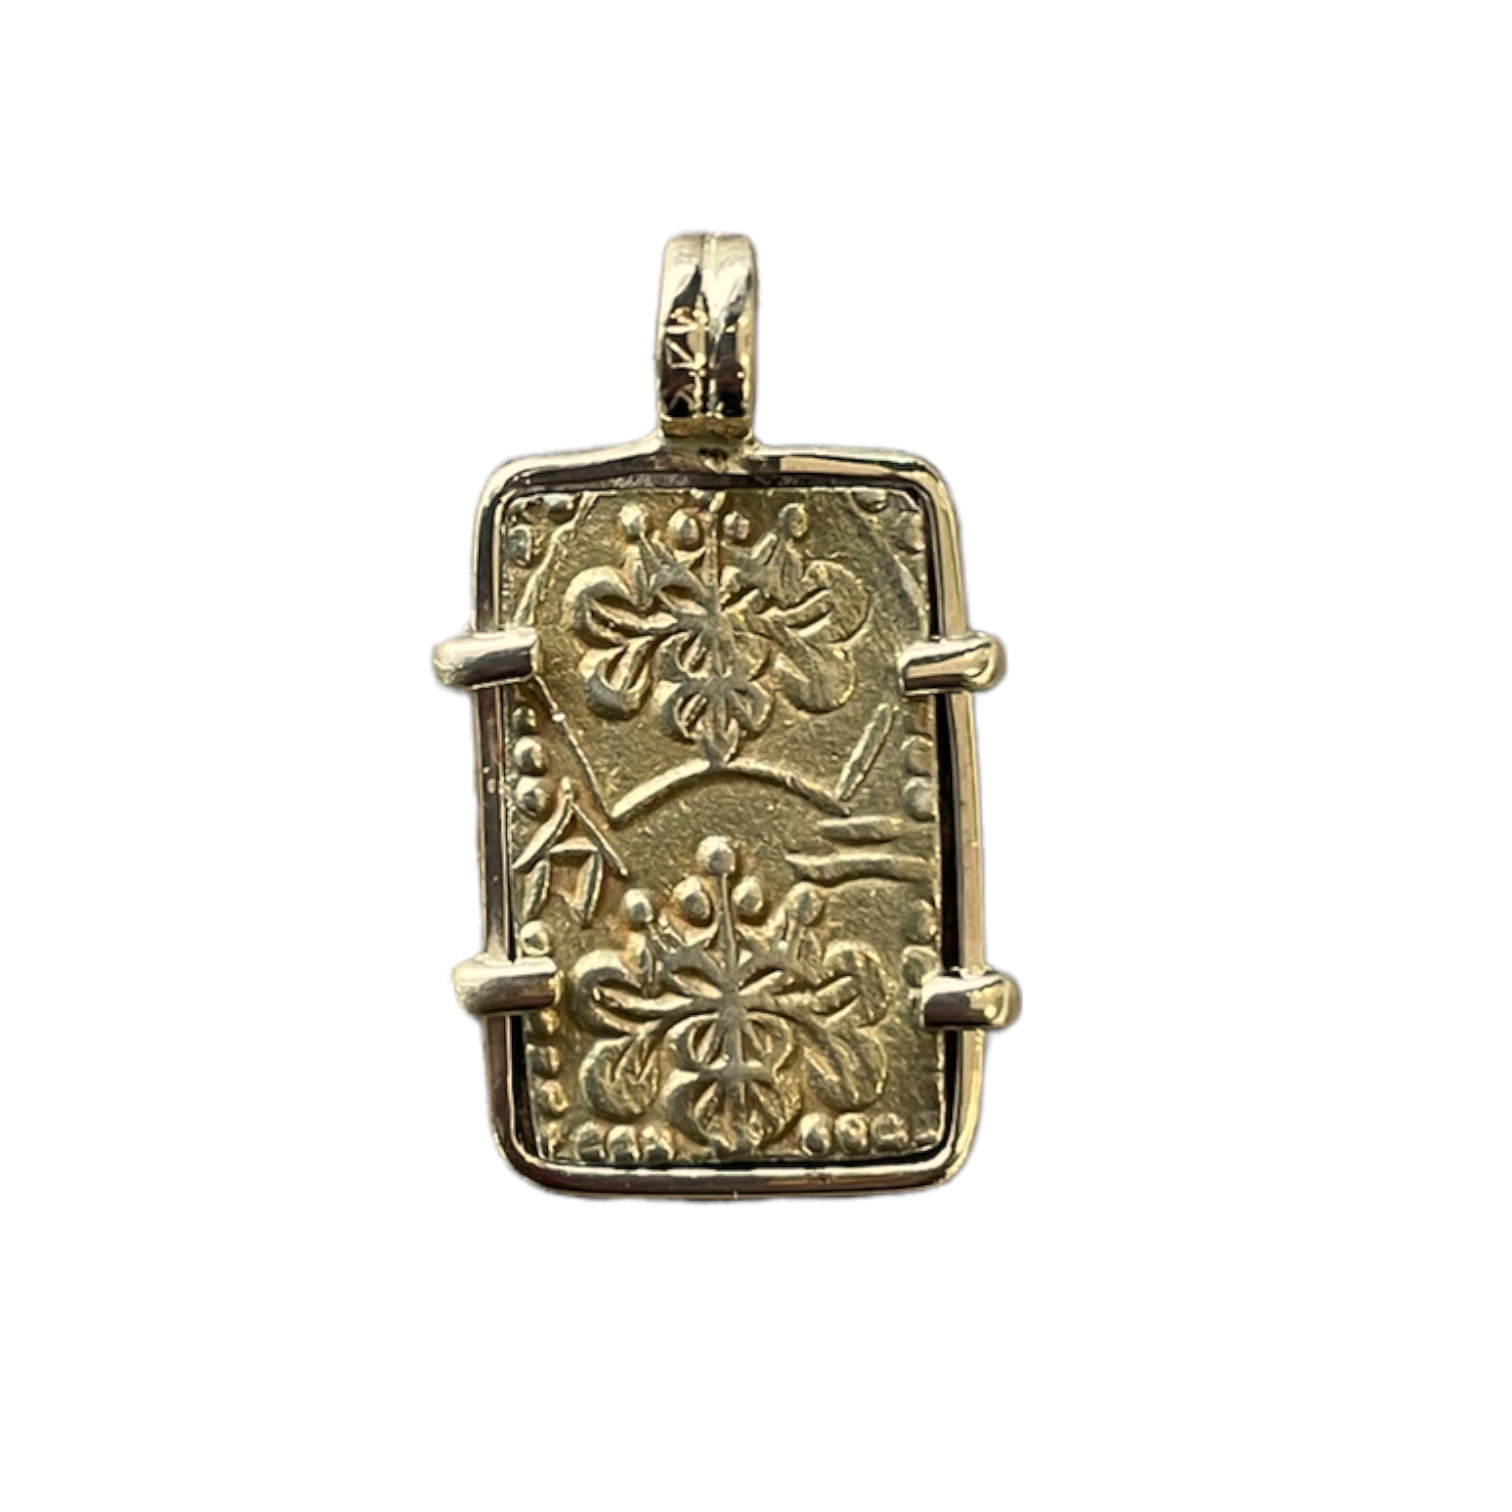 Japanese Samurai Coin - Nibu-Kin (2Bu) - Meija Era (1868-1869) - Mounted in a 14K gold bezel